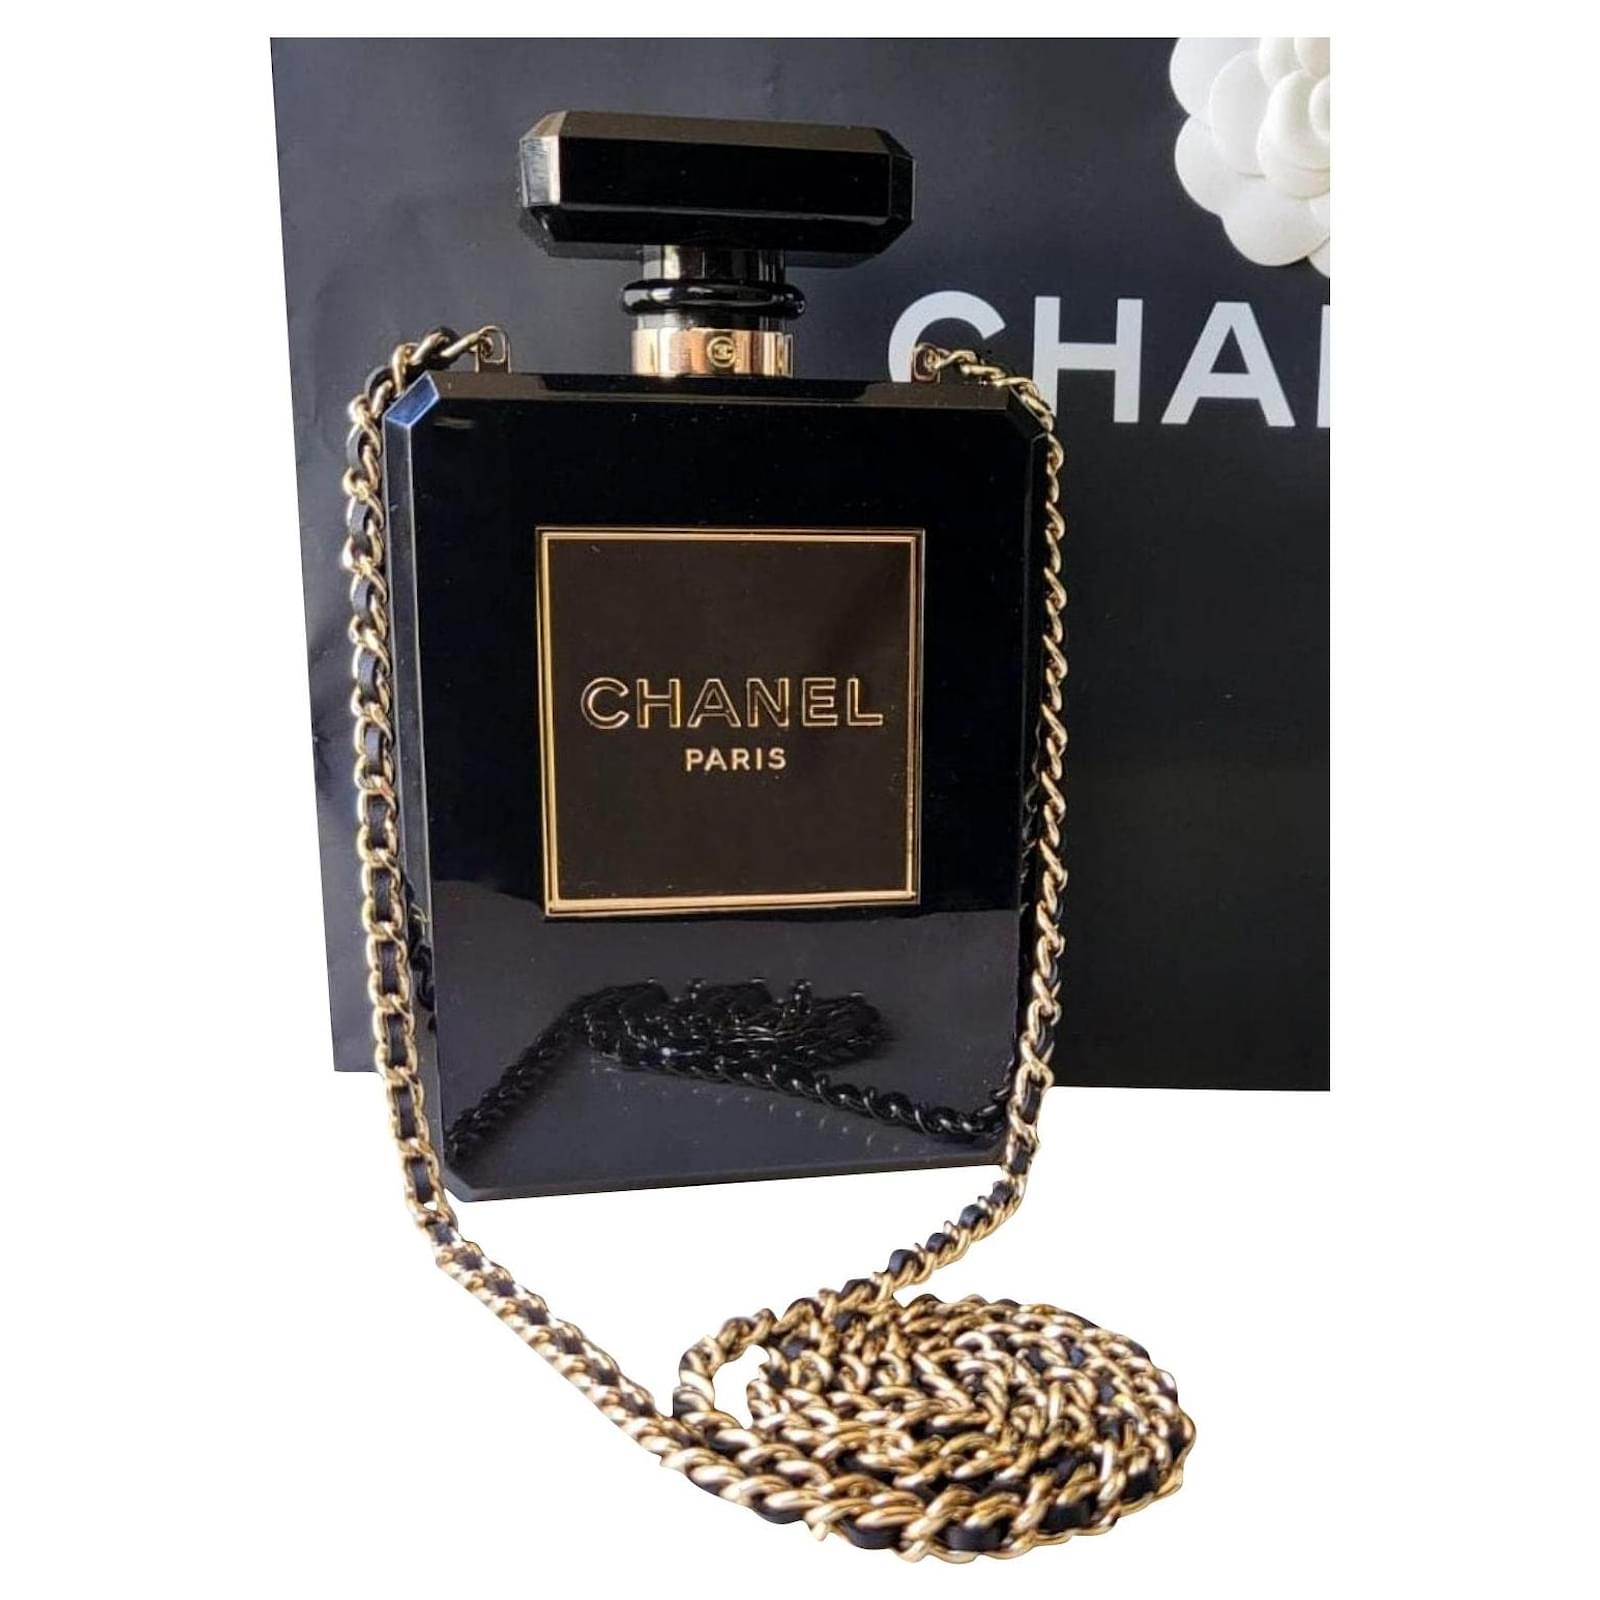 Chanel Evening Bag No. 5 Perfume Bottle Black/gold